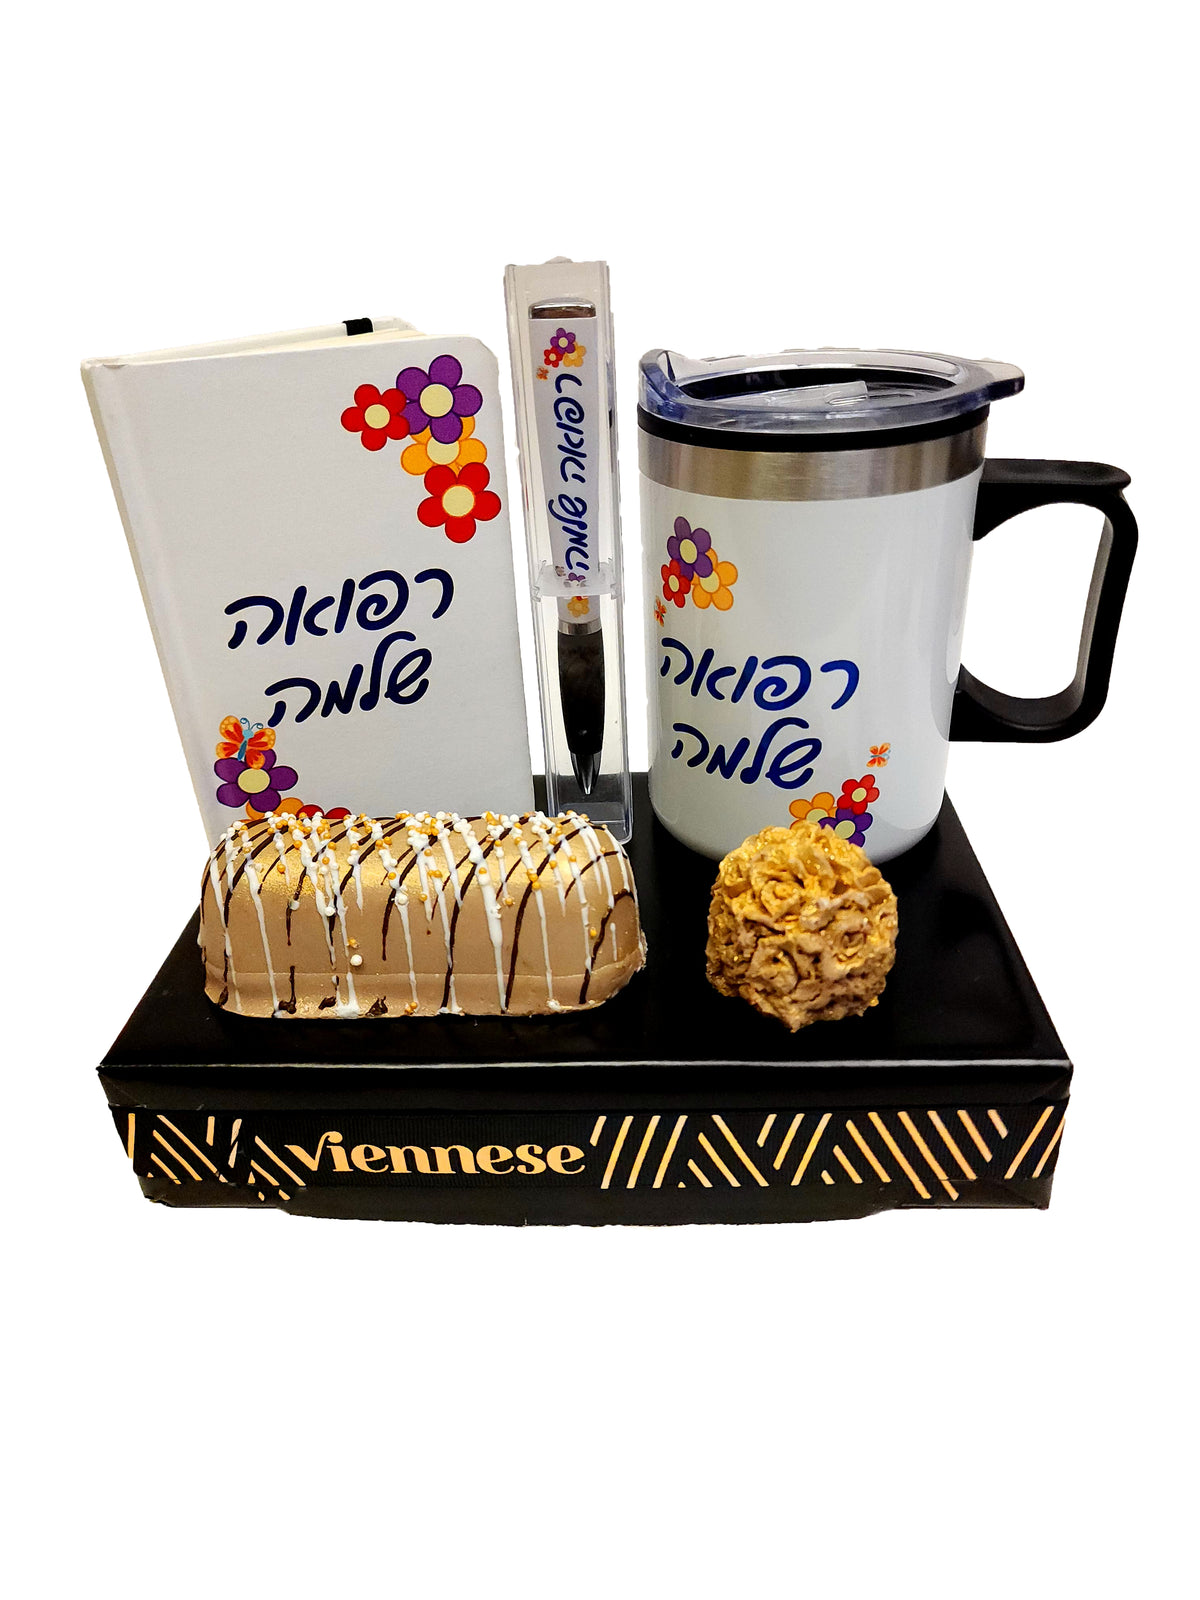 Refuah Shelima Gift Chocolate Arrangement Journal Pen and Mug (Get Well Soon)